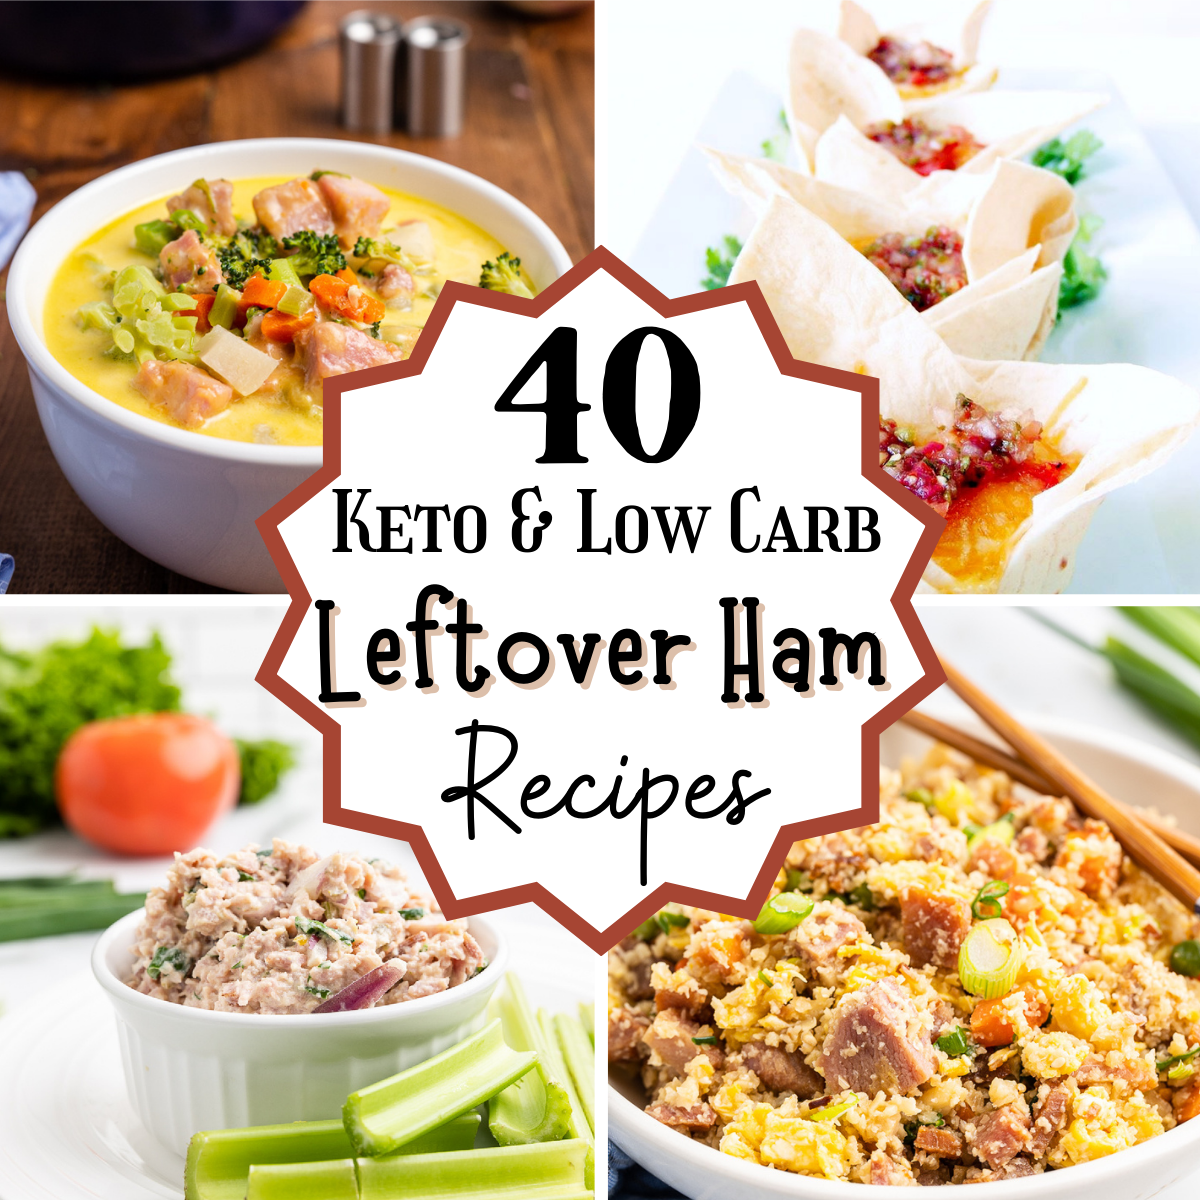 4 photo collage of keto leftover ham recipes.